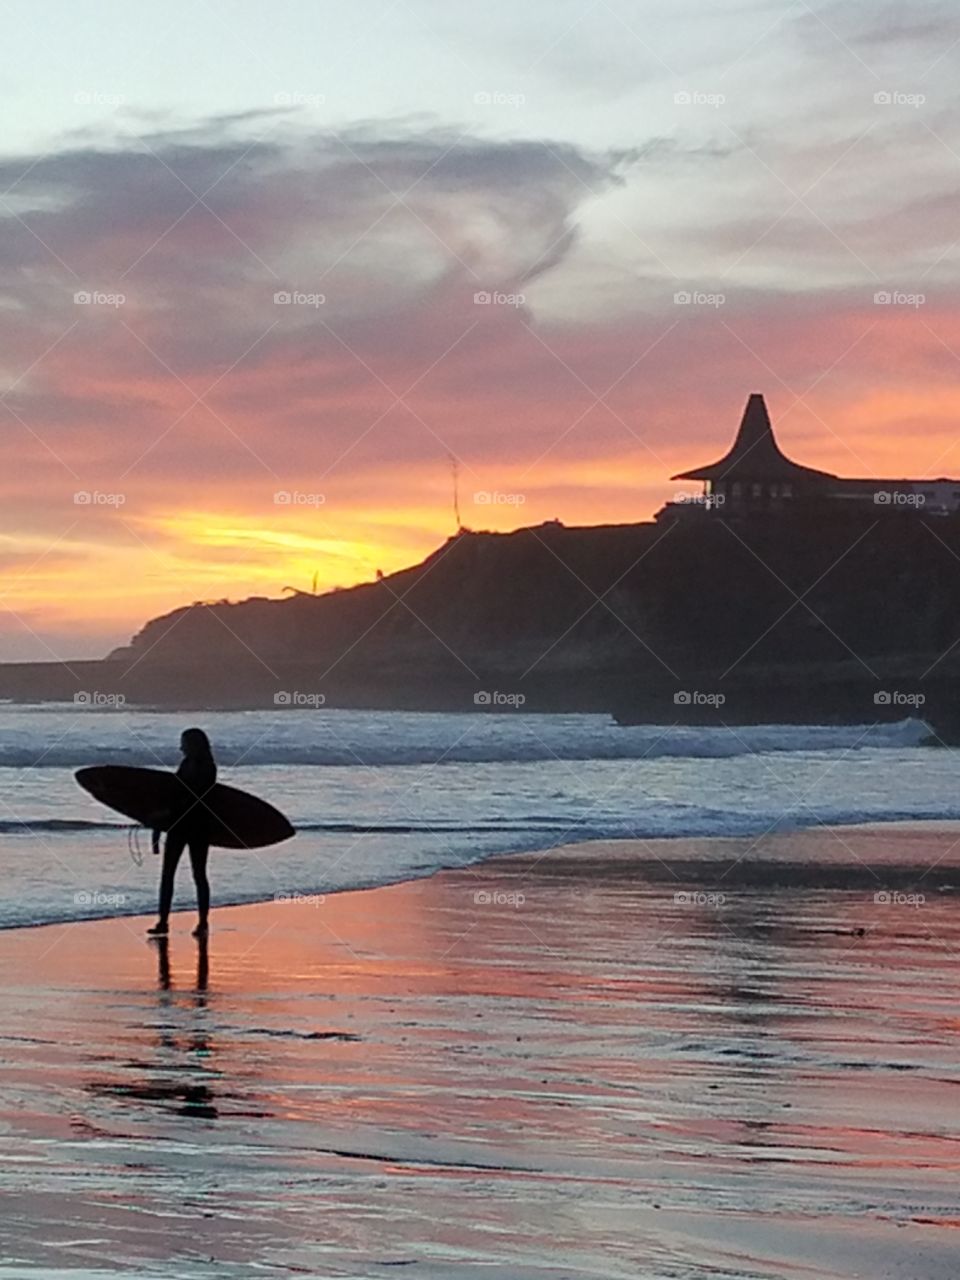 Surfer at sunset.